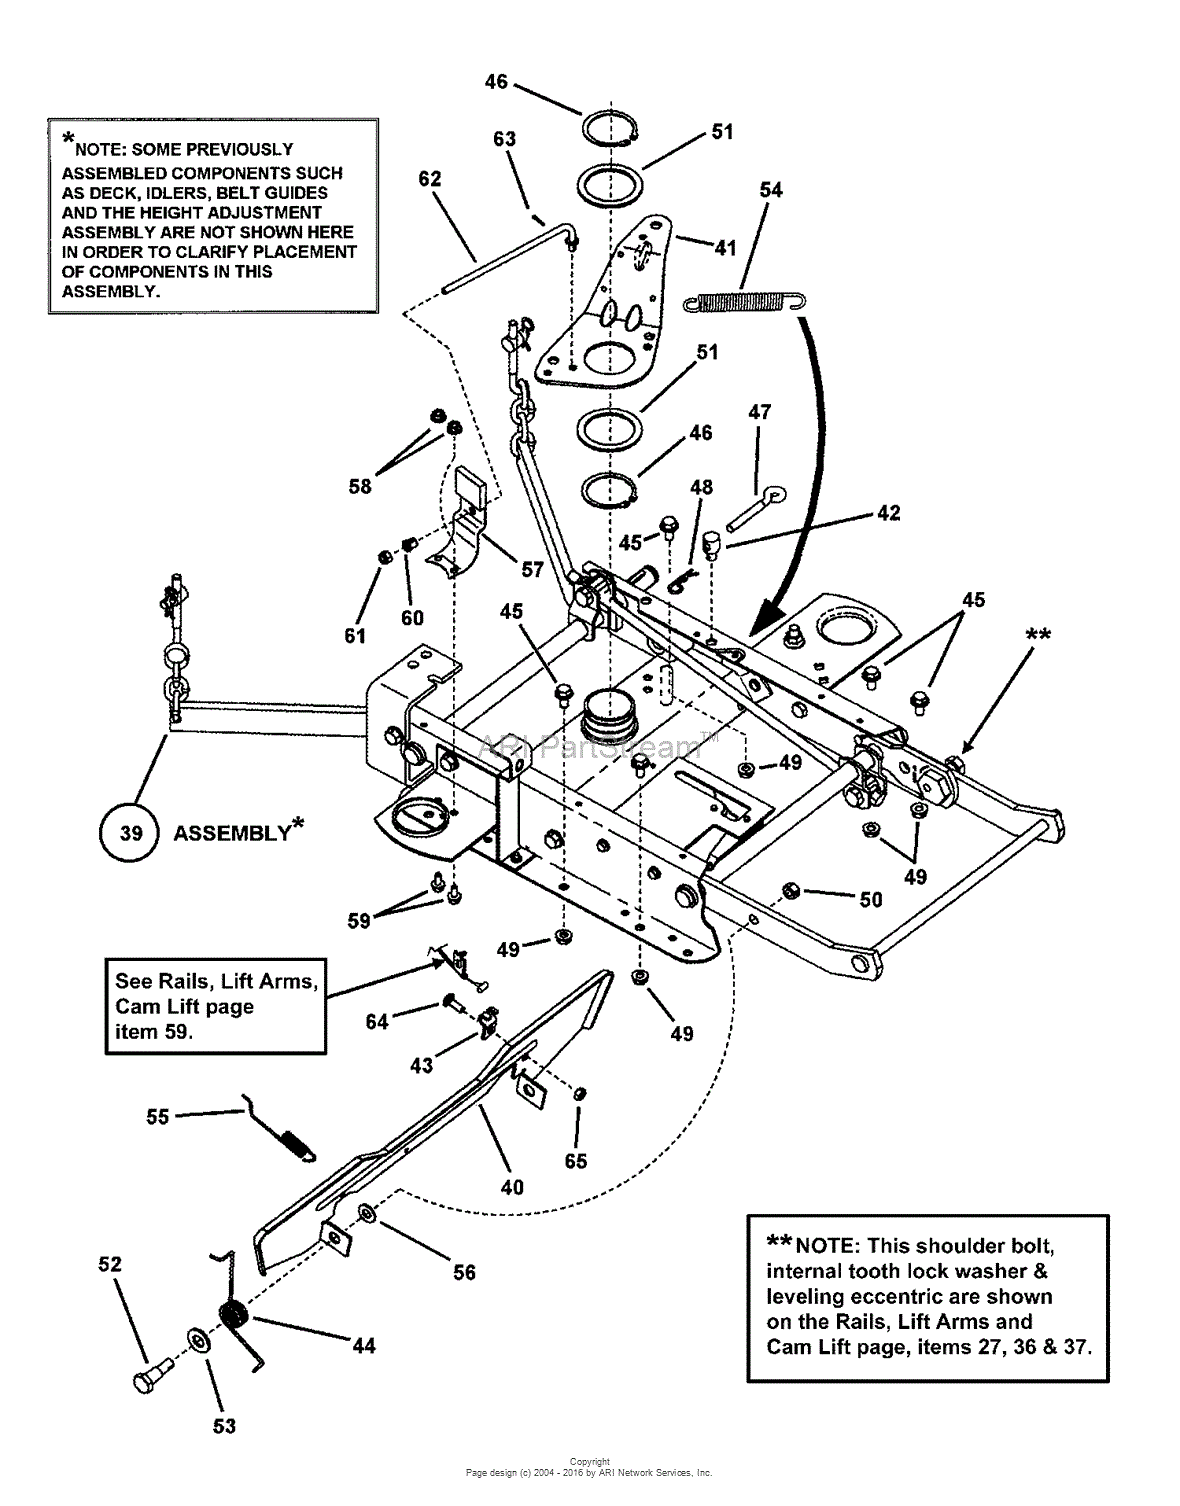 [DIAGRAM] Craftsman Rear Engine Riding Mower Parts Wiring Diagram ...